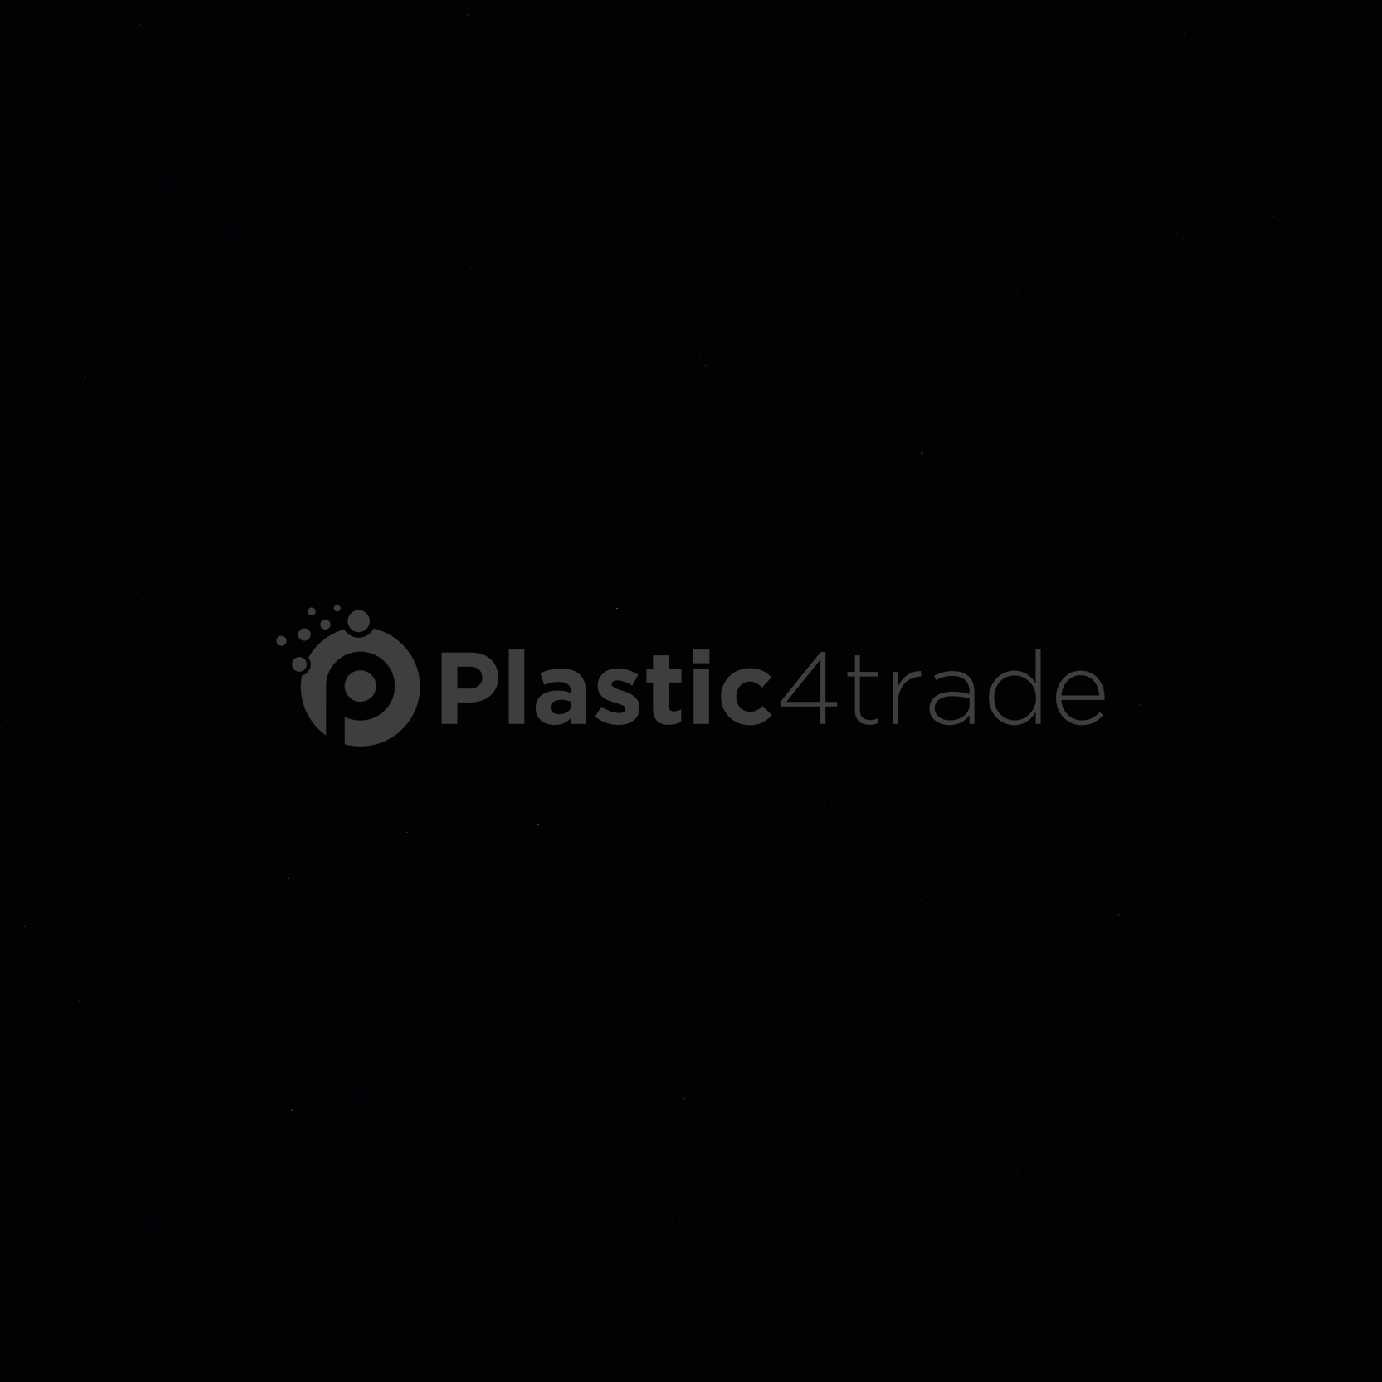 ABS GRANULES PP Off Grade Injection Molding karnataka india Plastic4trade